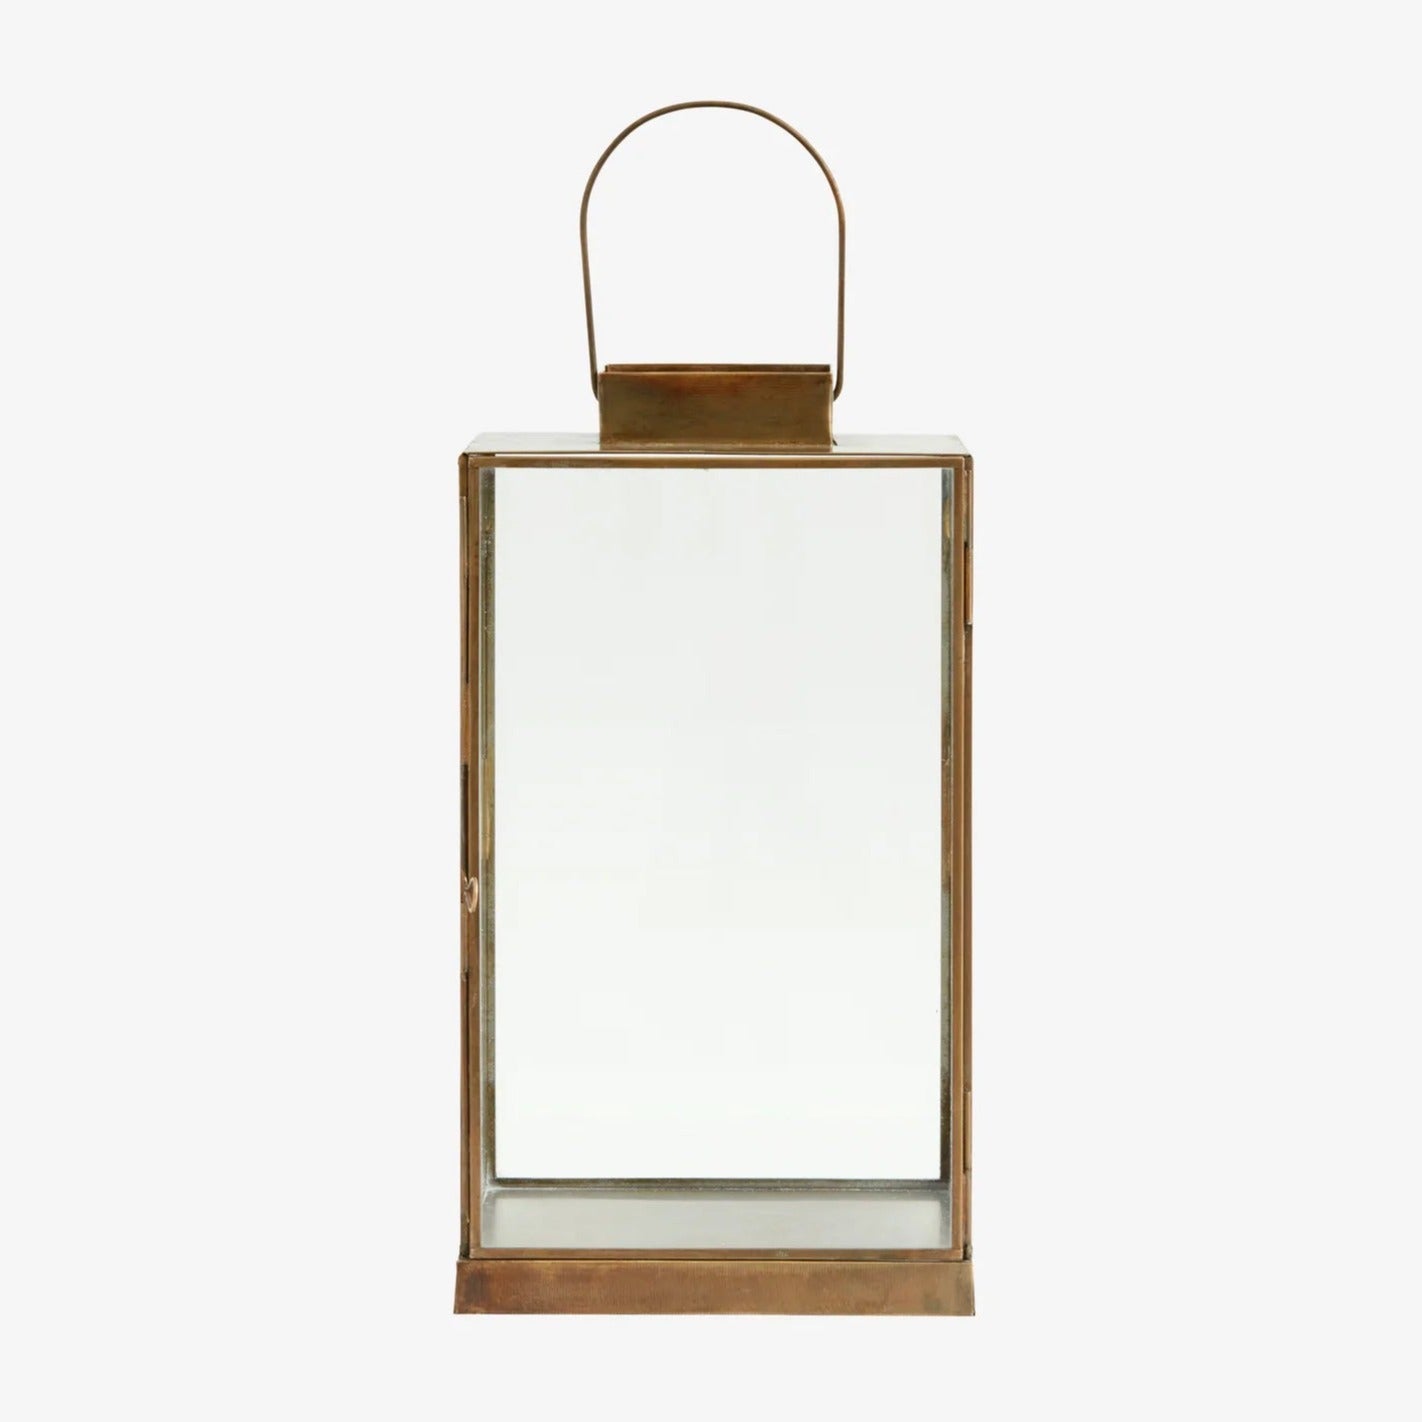 Medium lantern with flat top